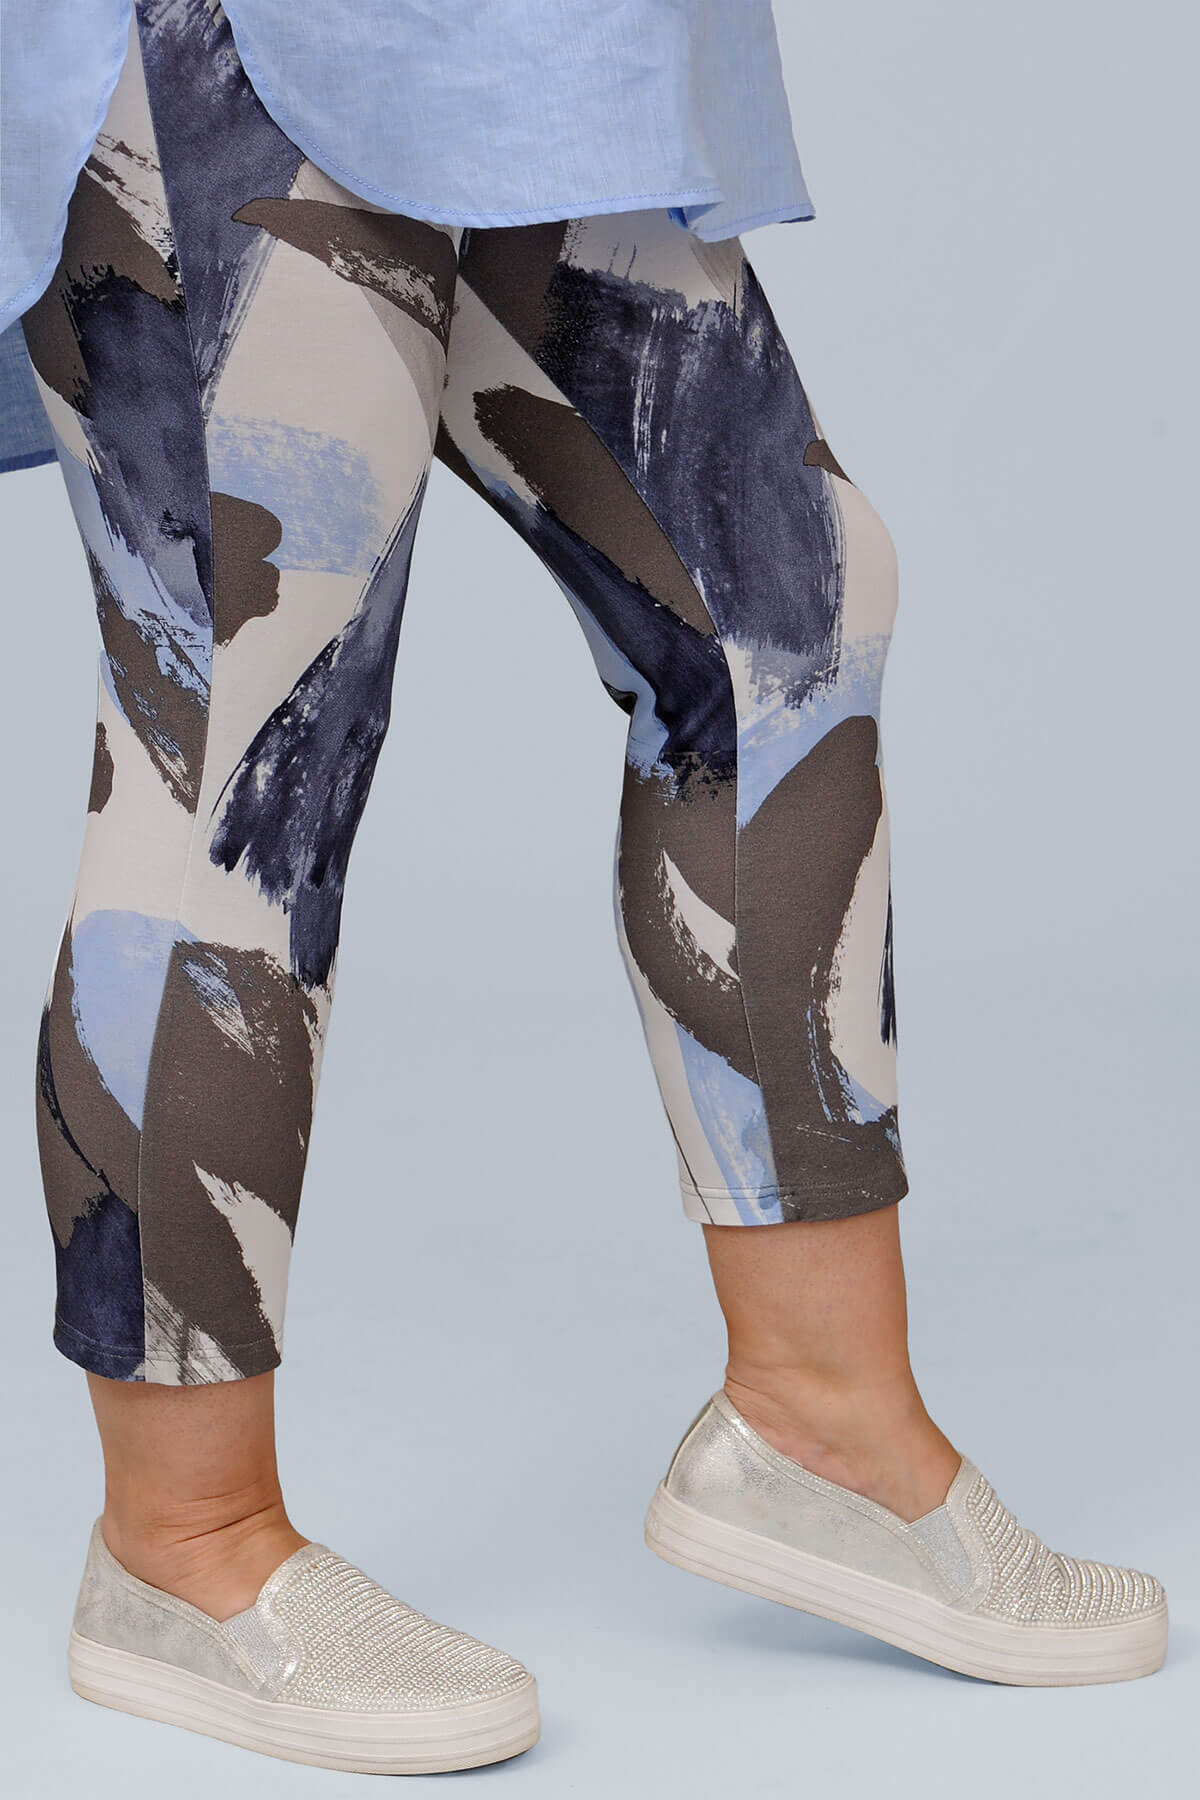 Doris Streich abstract crop leggings